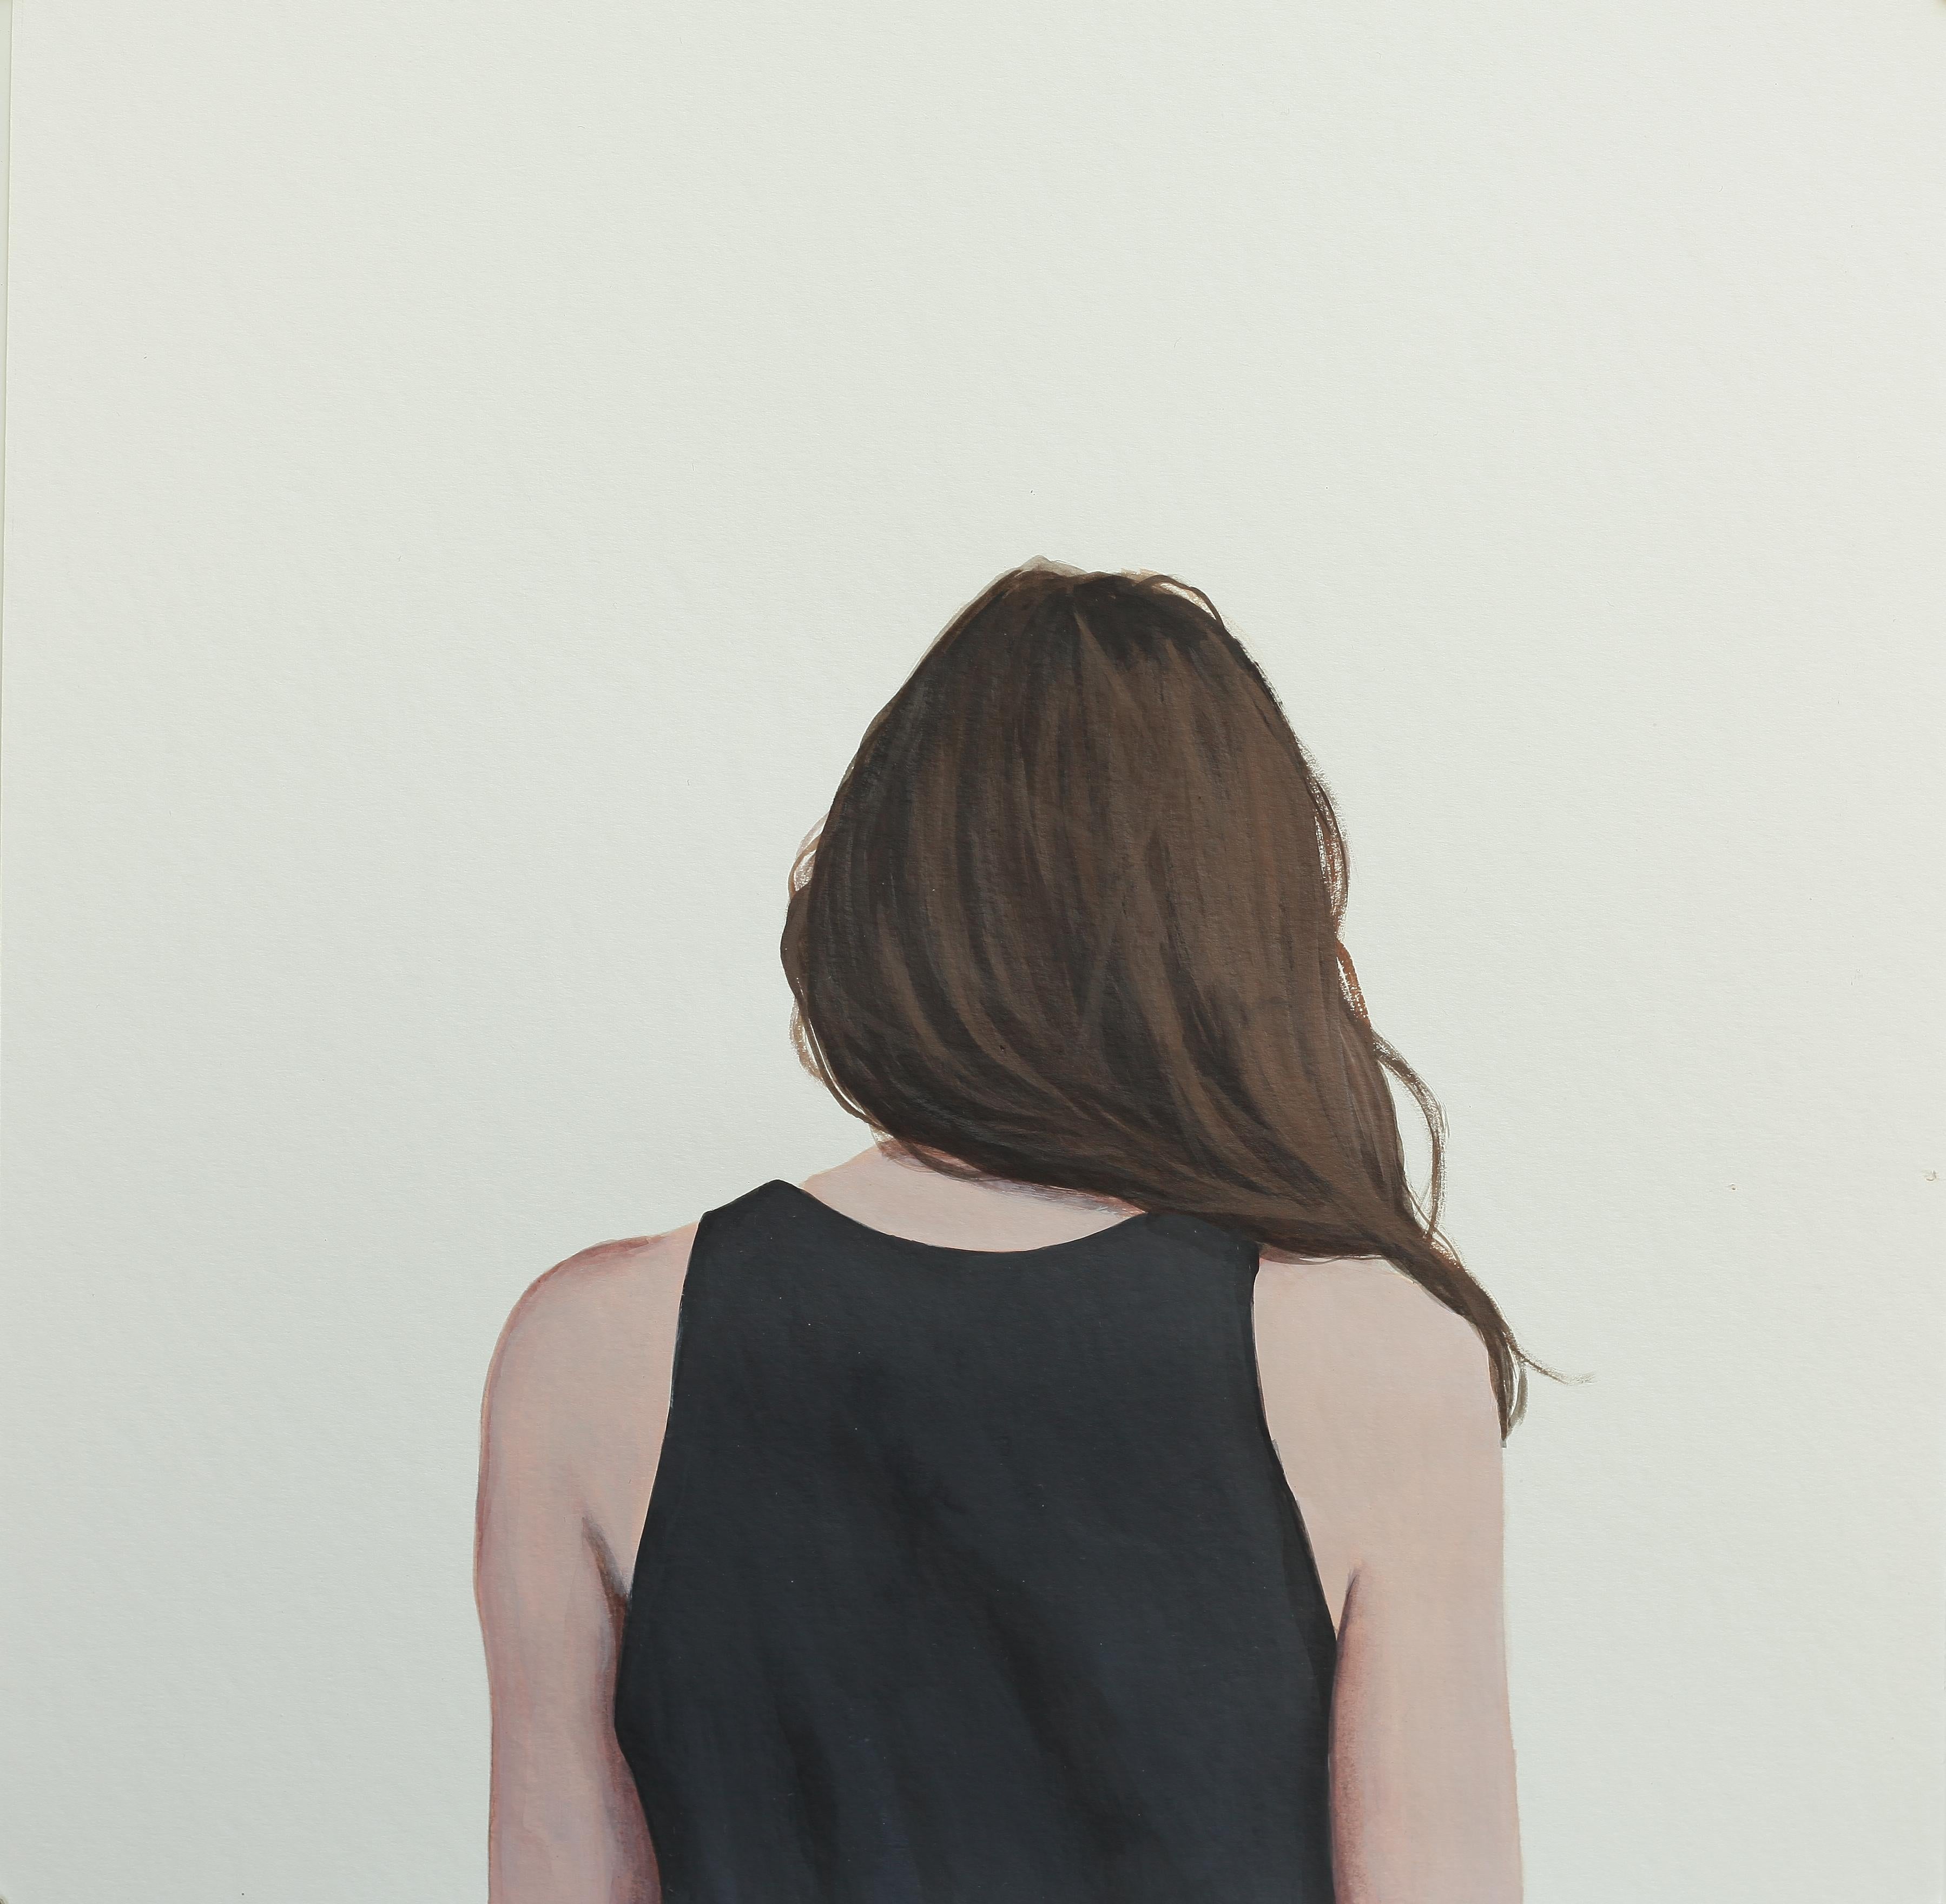 Karoline Kroiss Figurative Painting - "Back Portrait IX" Contemporary Portrait Painting of a Girl 